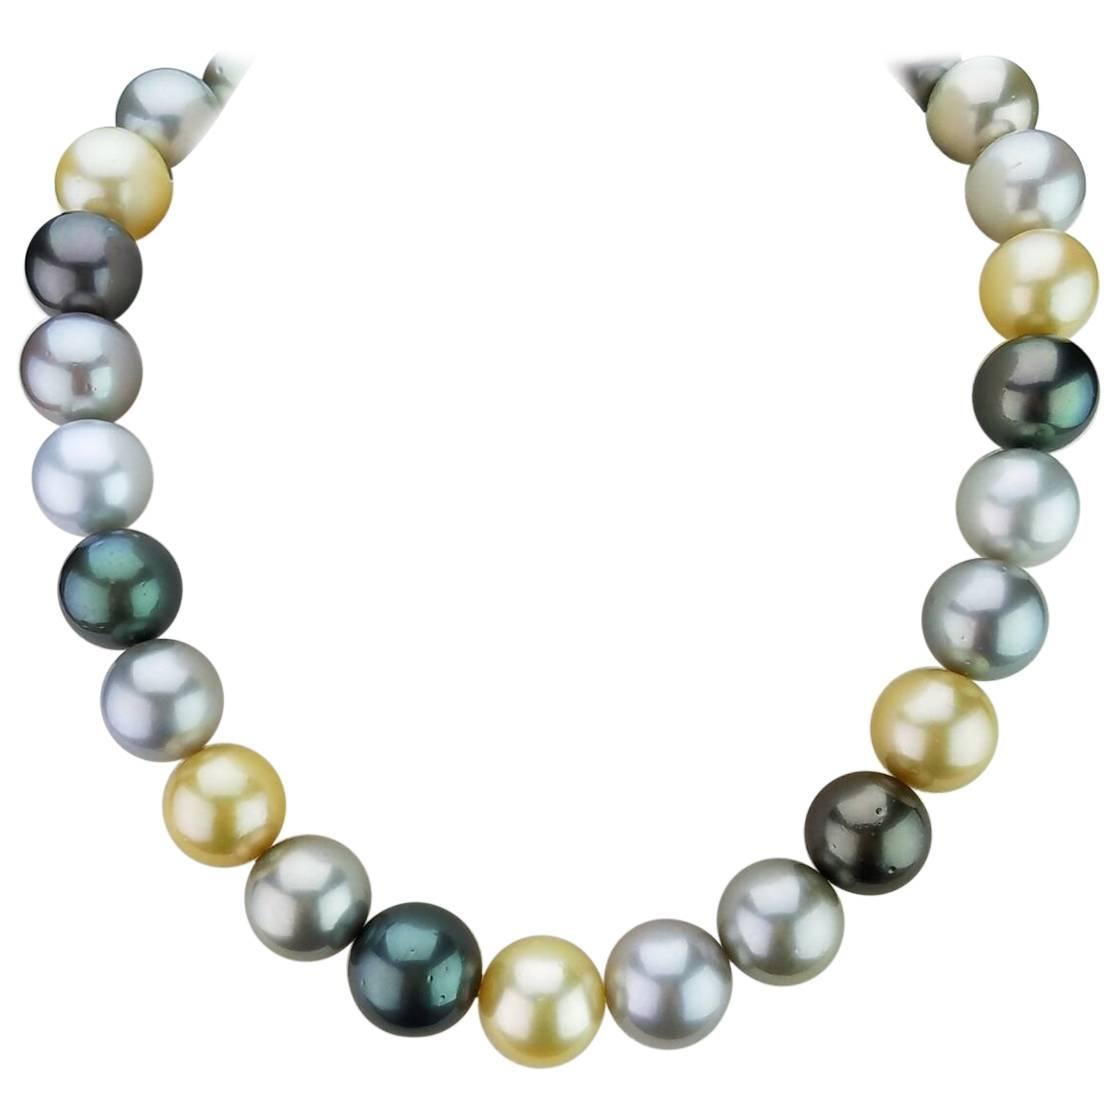 Multicolored Natural South Sea Pearl Necklace